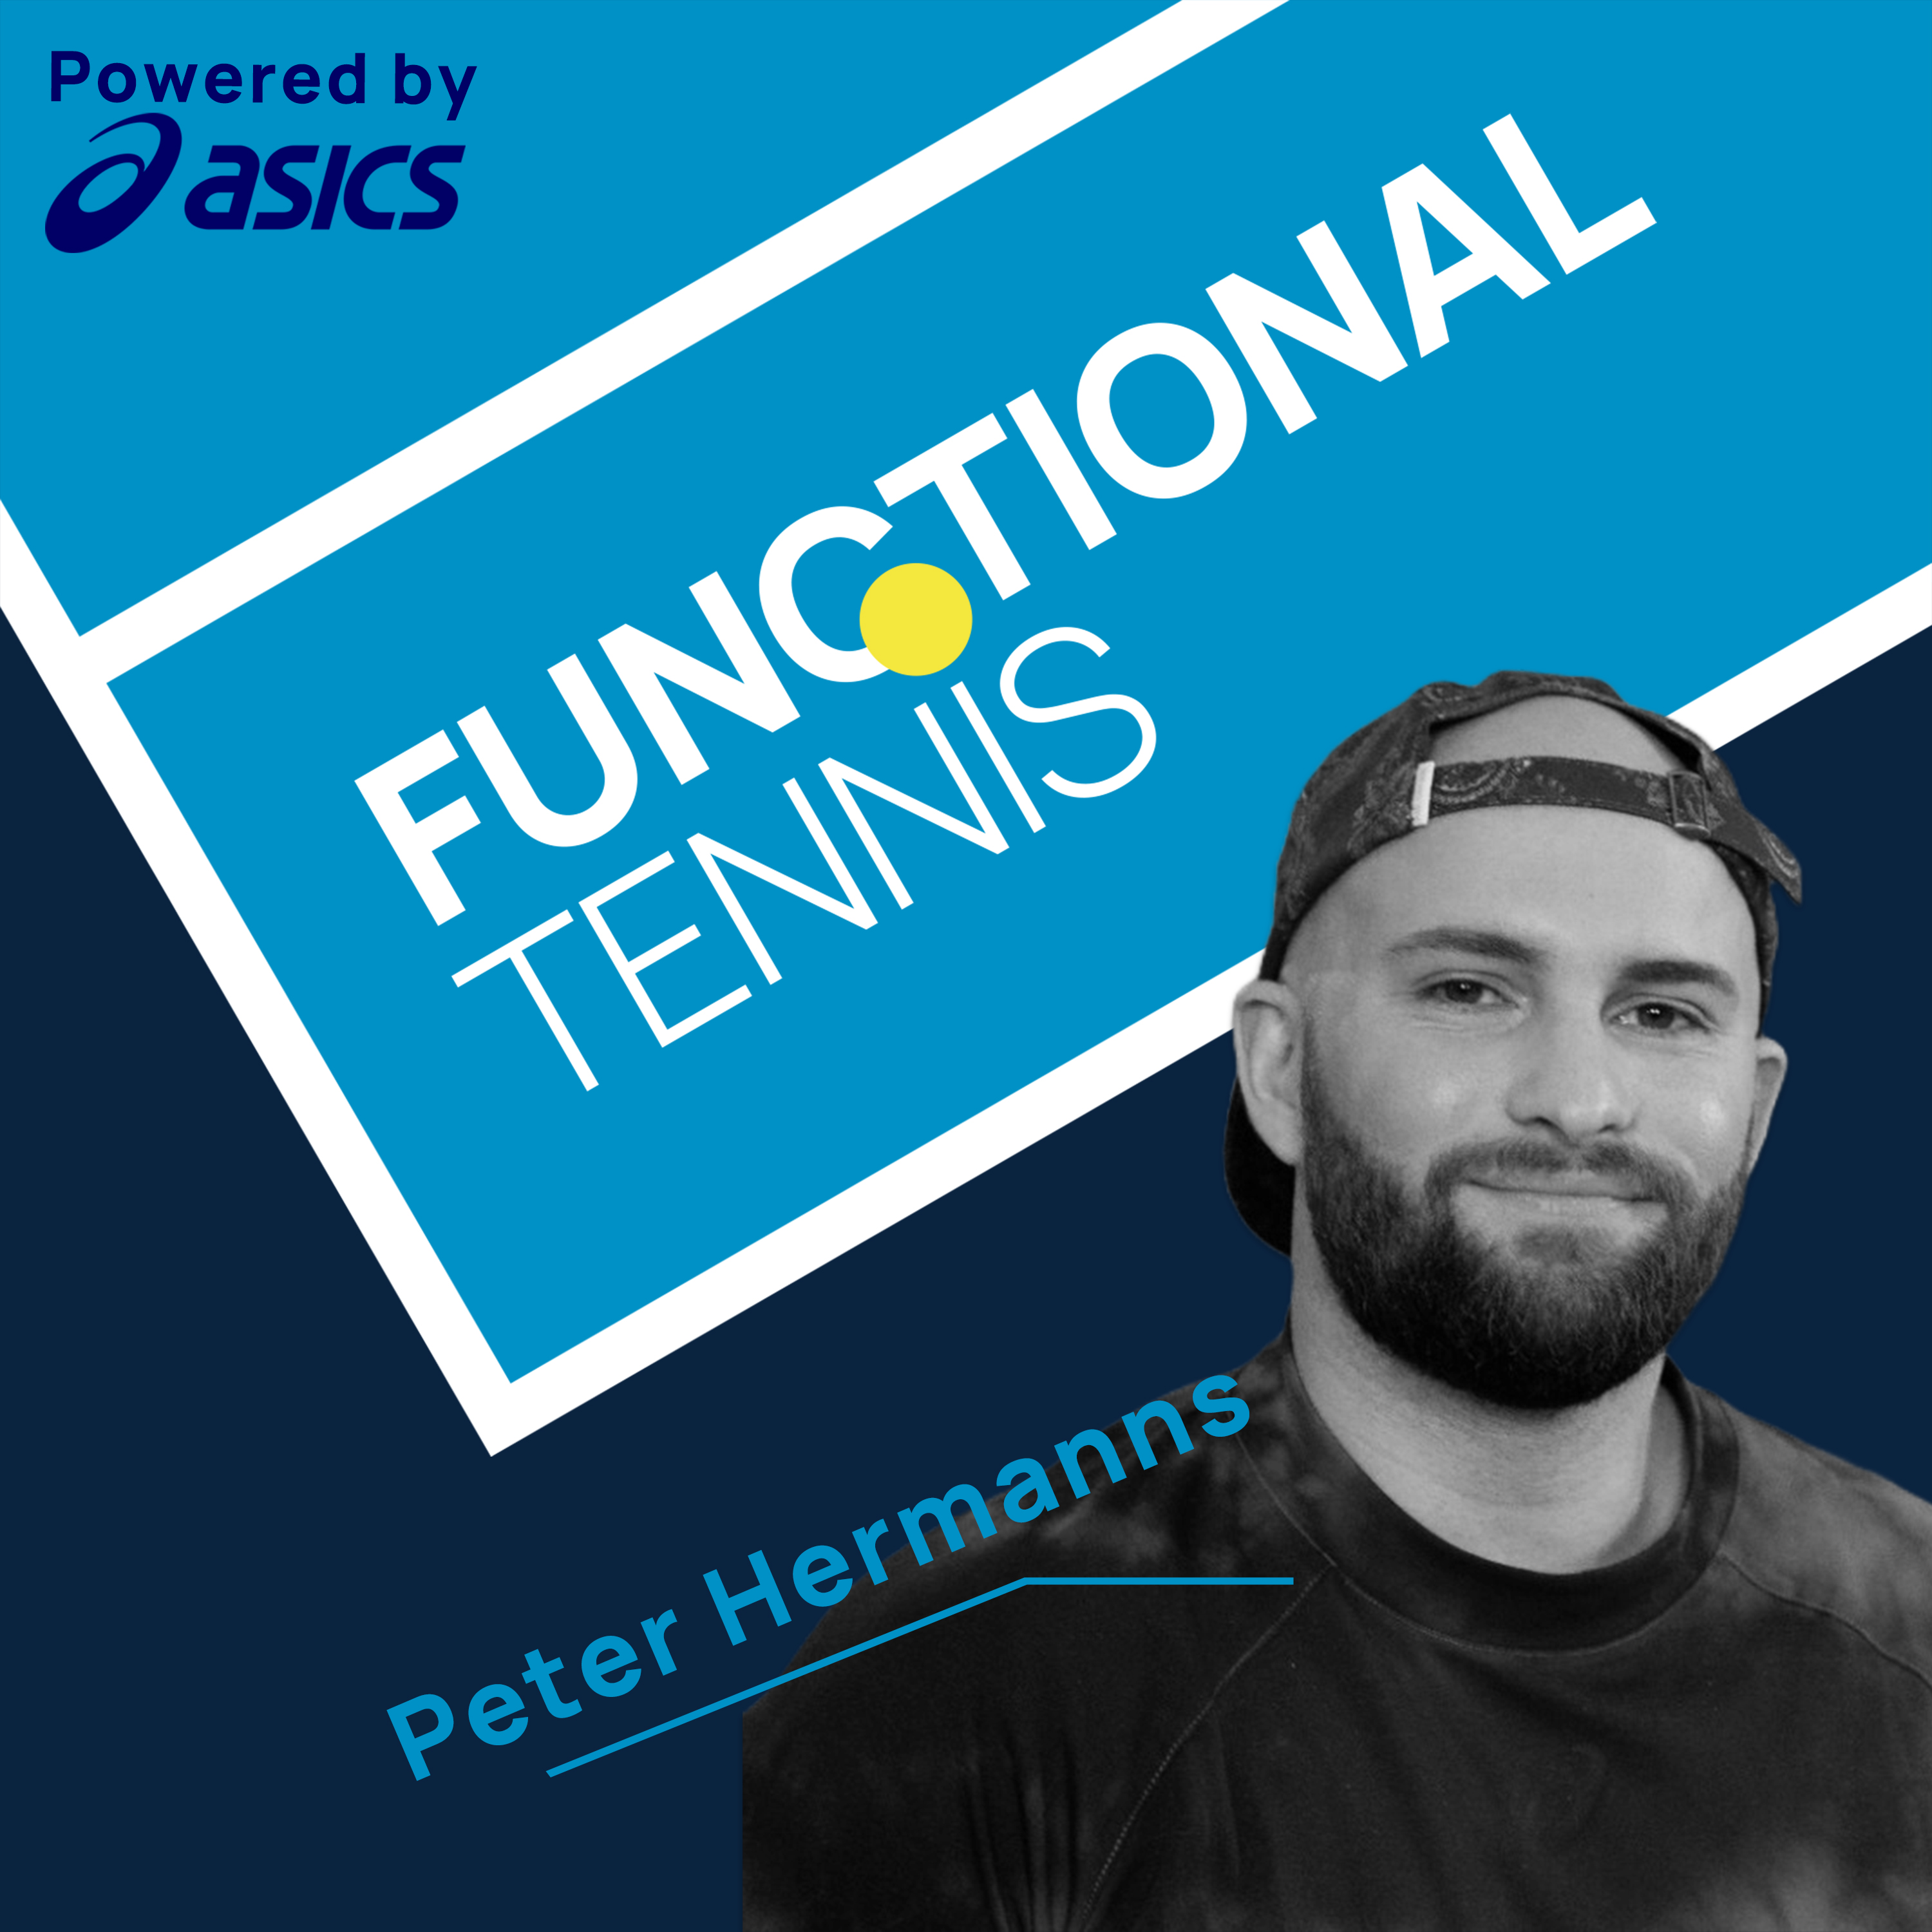 Peter Hemanns - Asics Tennis Product Manager